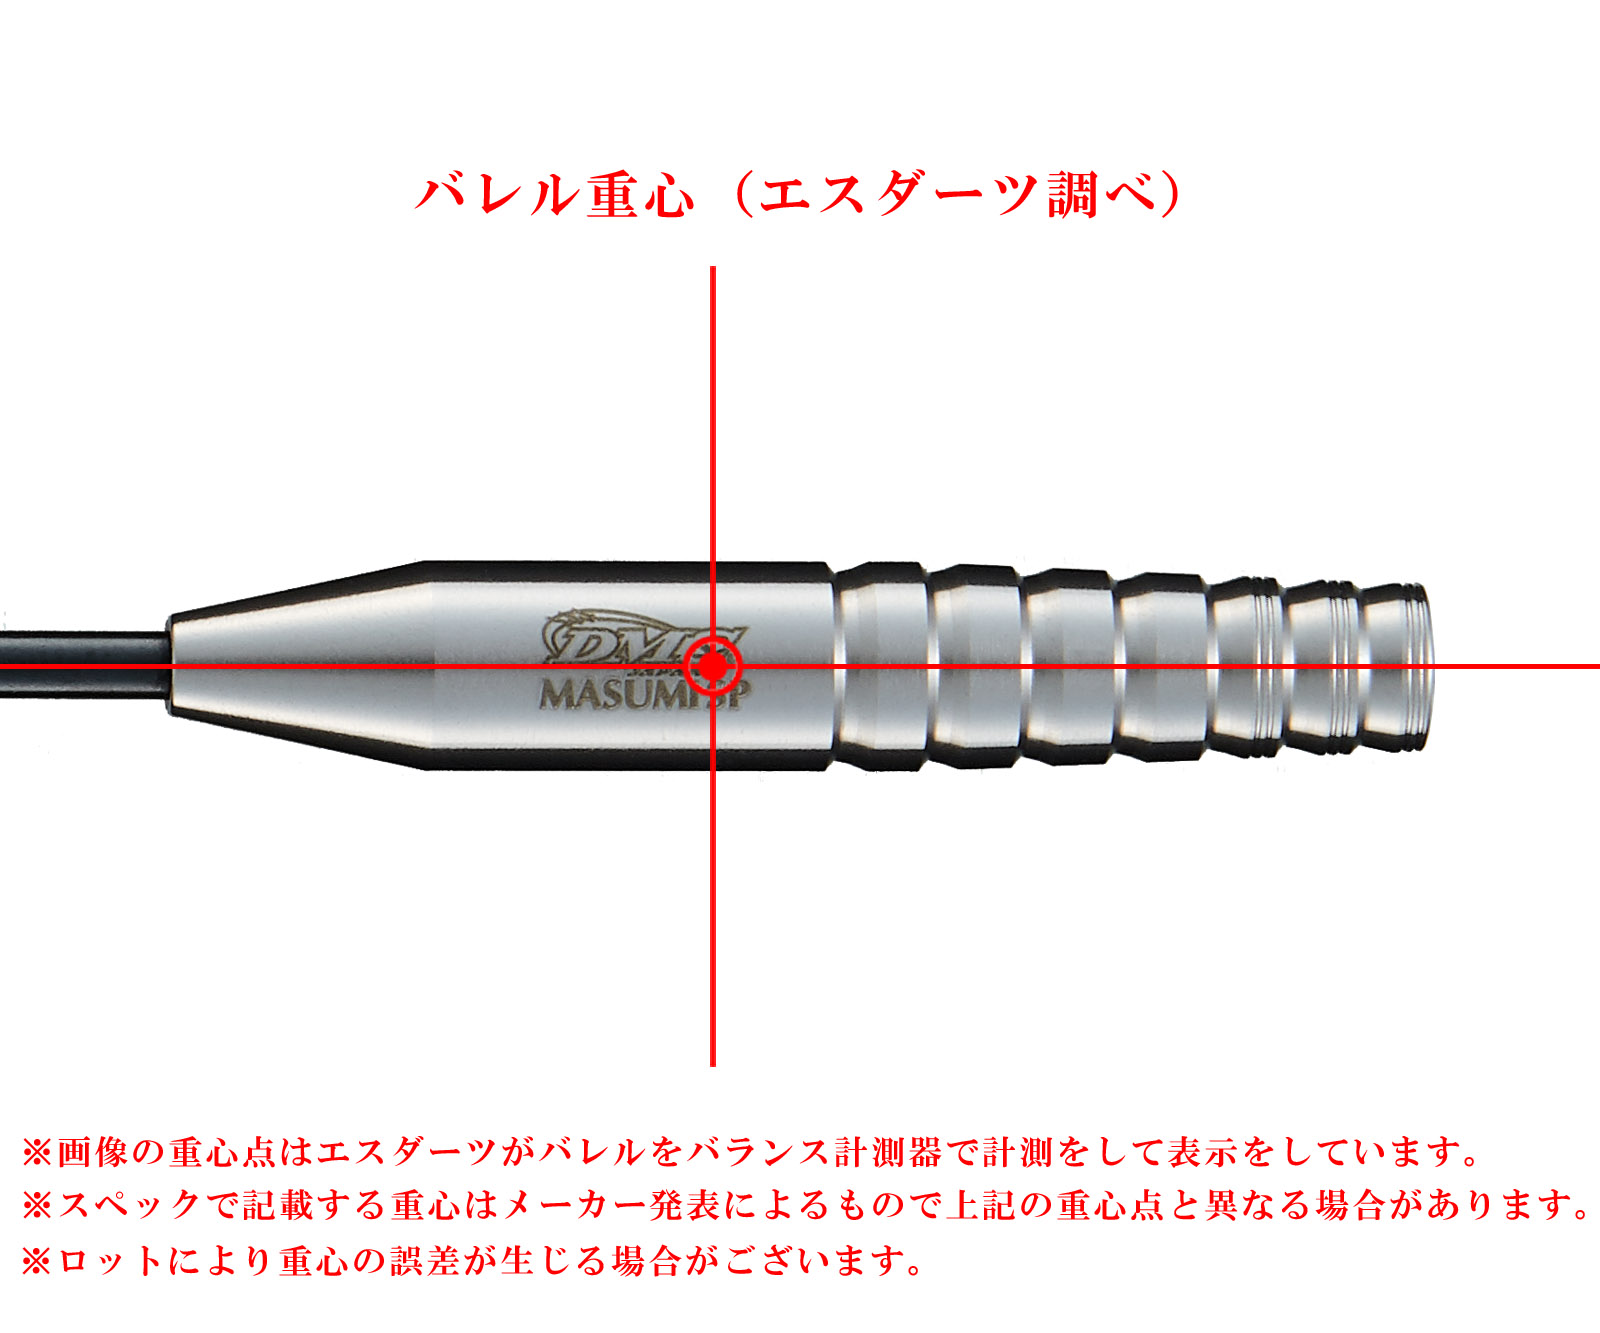 【DMC】Sabre MASUMI SP Ver.2 Masumi Chino model Steel 